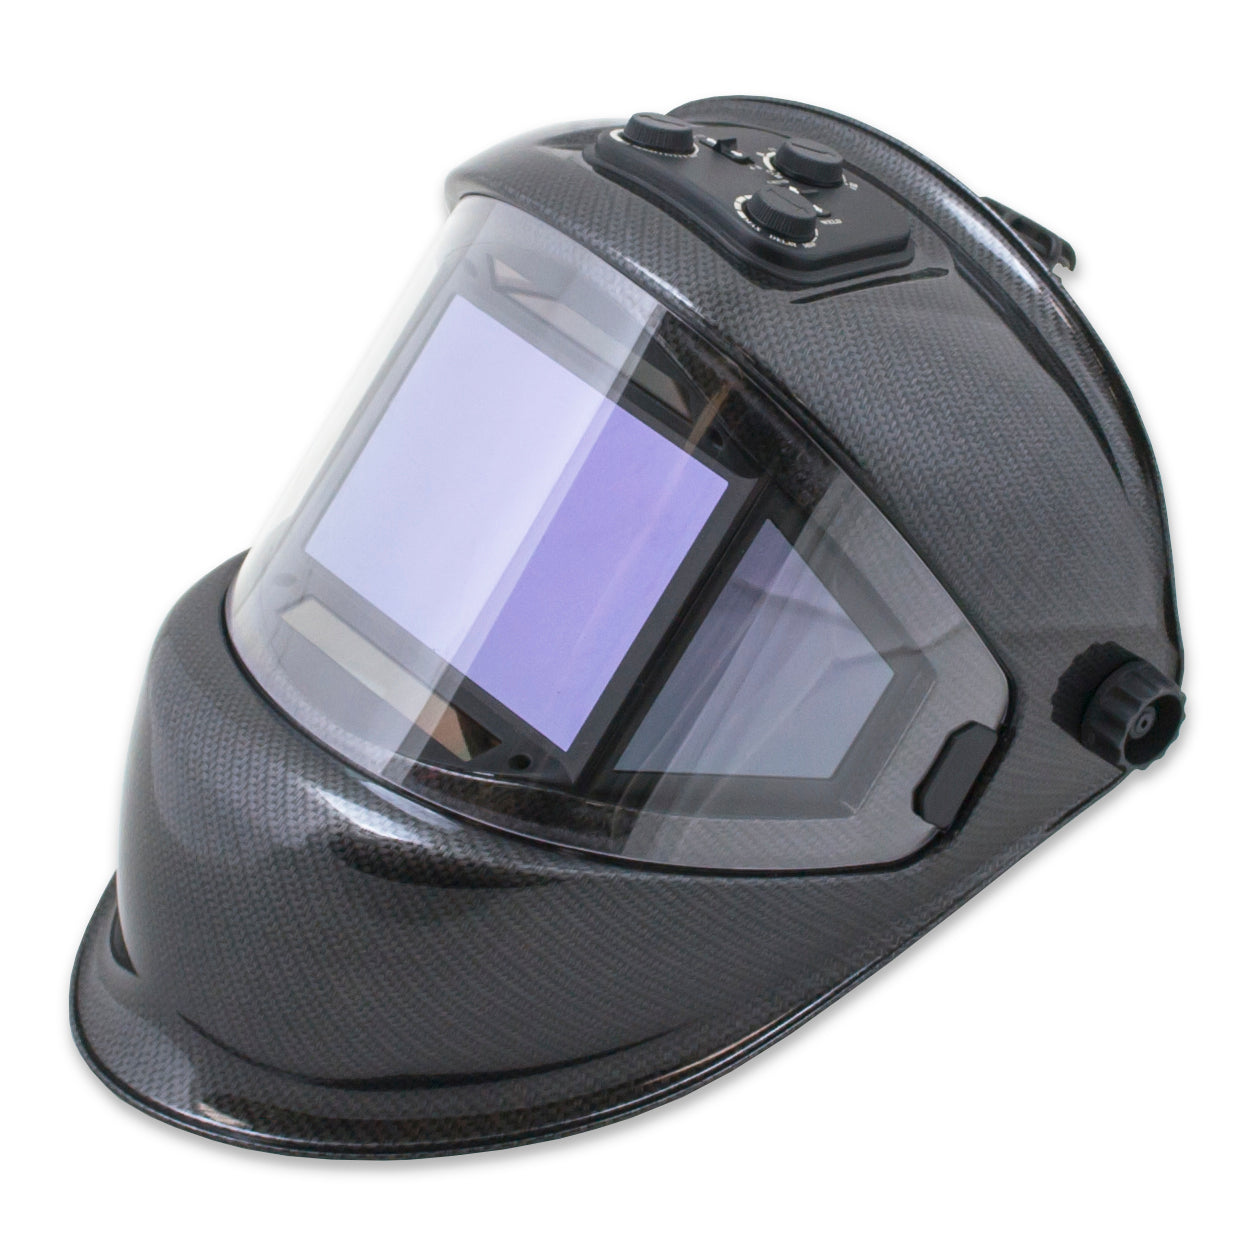 TGR Panoramic 180 View Solar Powered Auto Darkening Welding Helmet - True Color (Carbon Fiber)